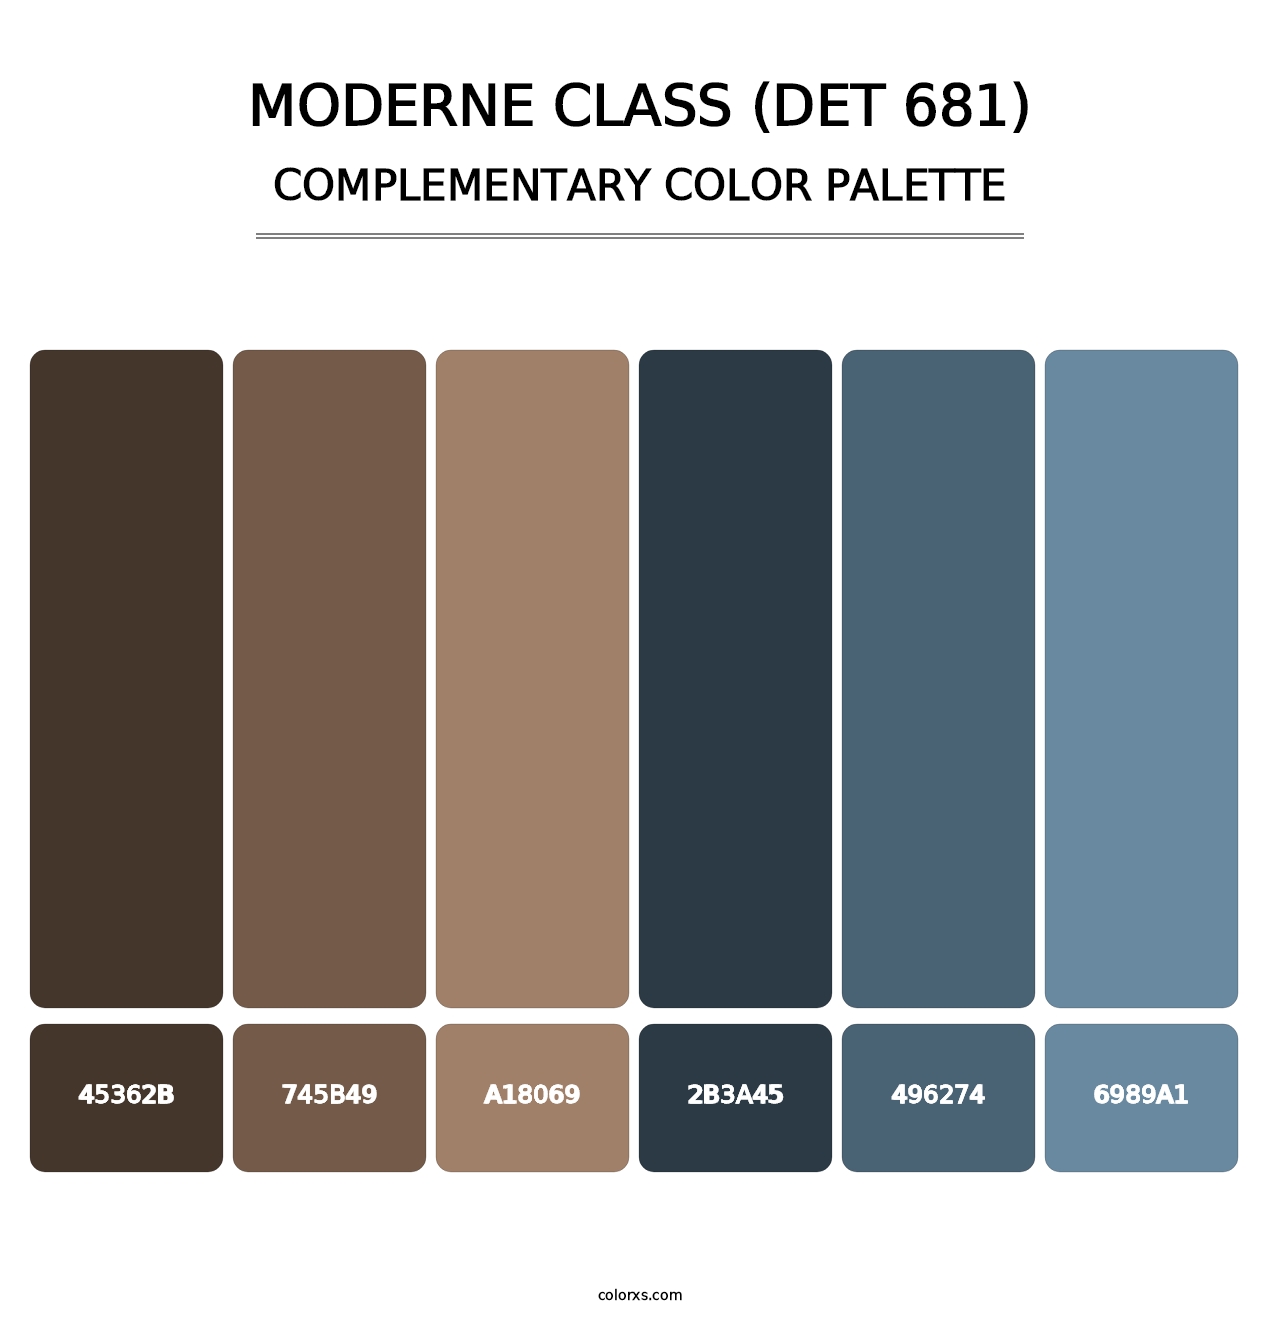 Moderne Class (DET 681) - Complementary Color Palette